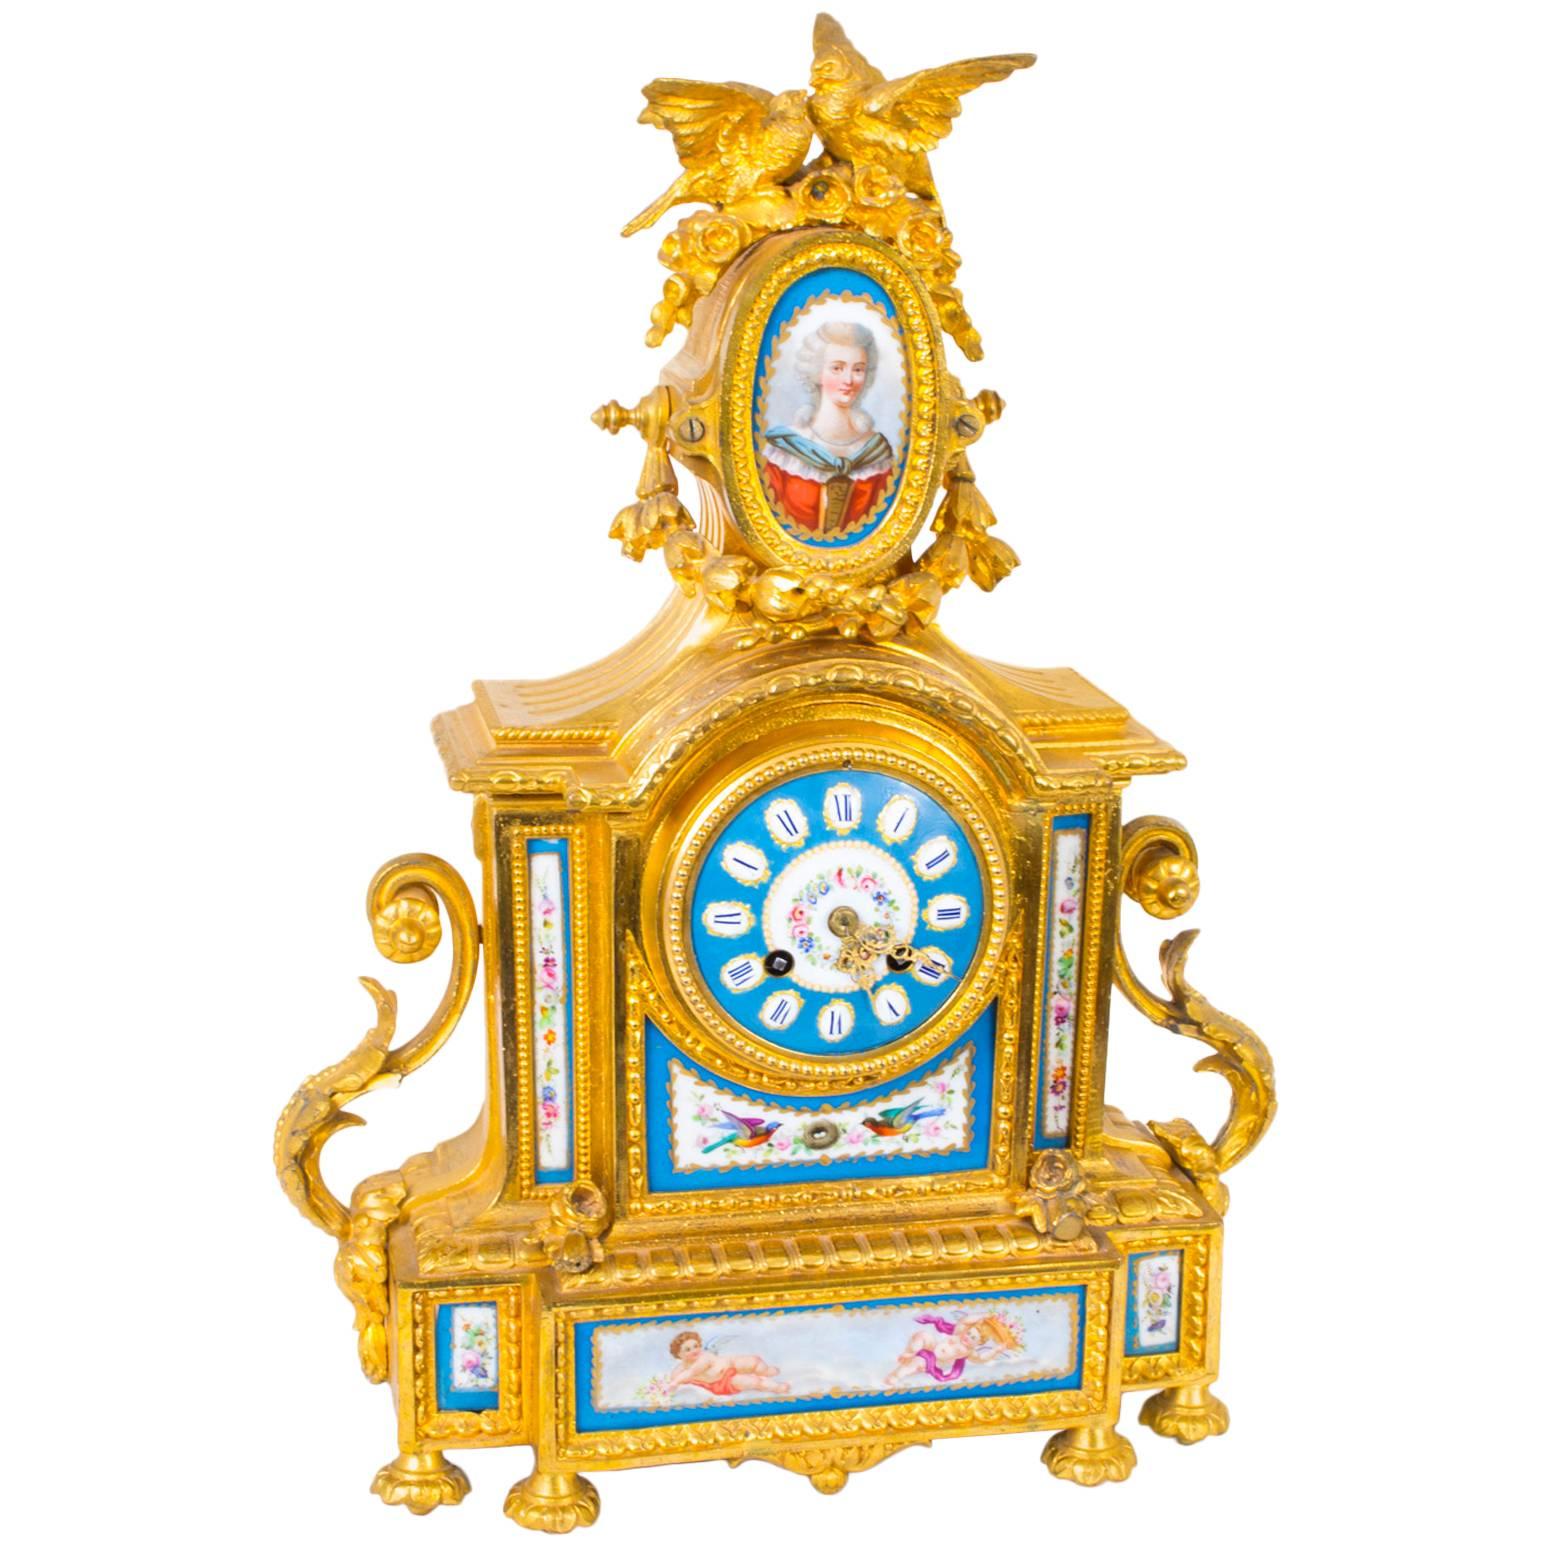 19th Century French Ormolu Sevres Porcelain Mantel Clock